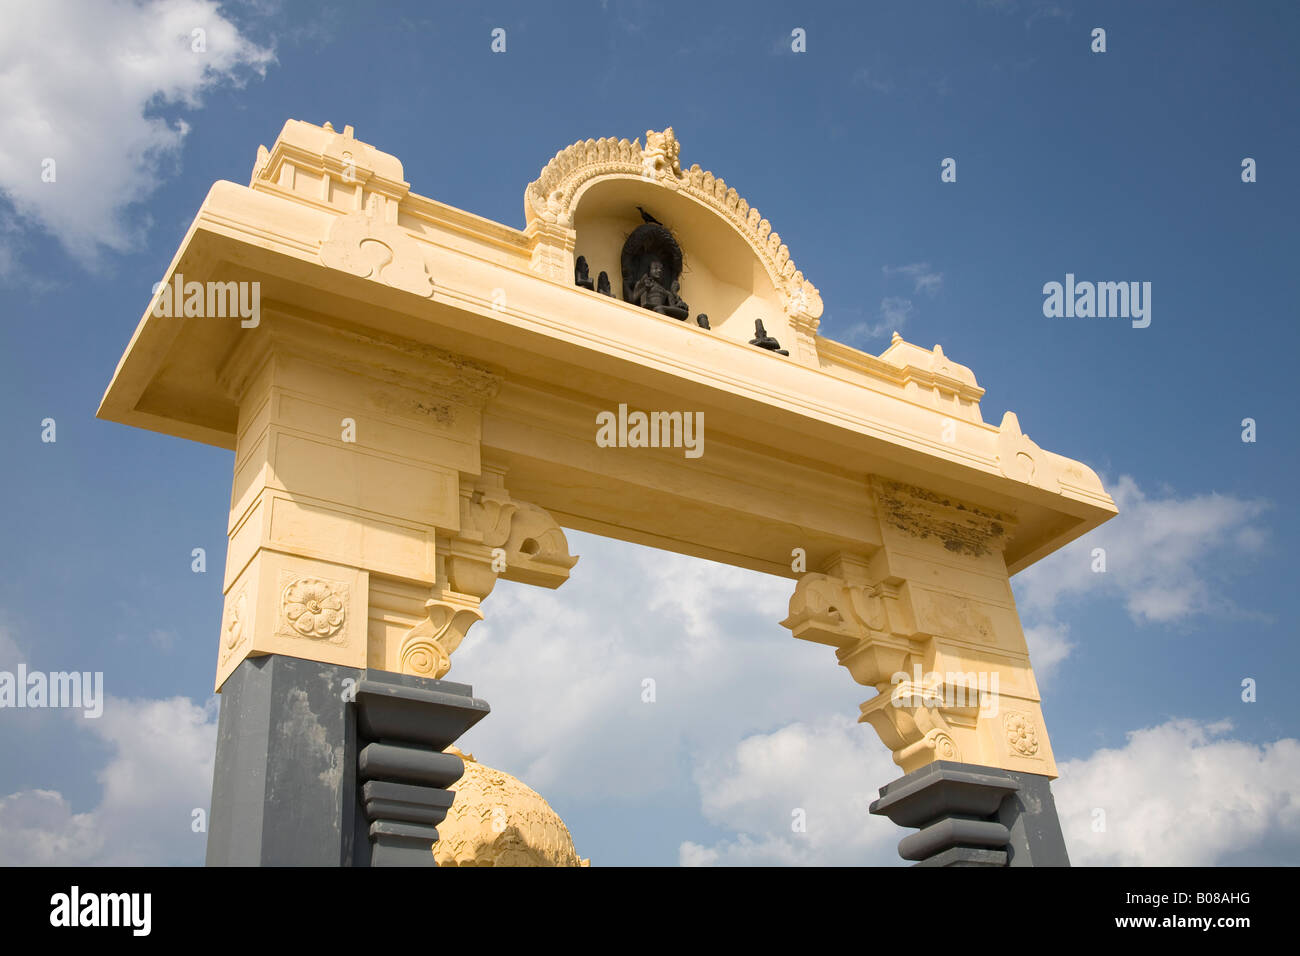 Arch at entrance to Sri Adhi Sankarar Temple, Kanyakumari, Tamil Nadu, India Stock Photo